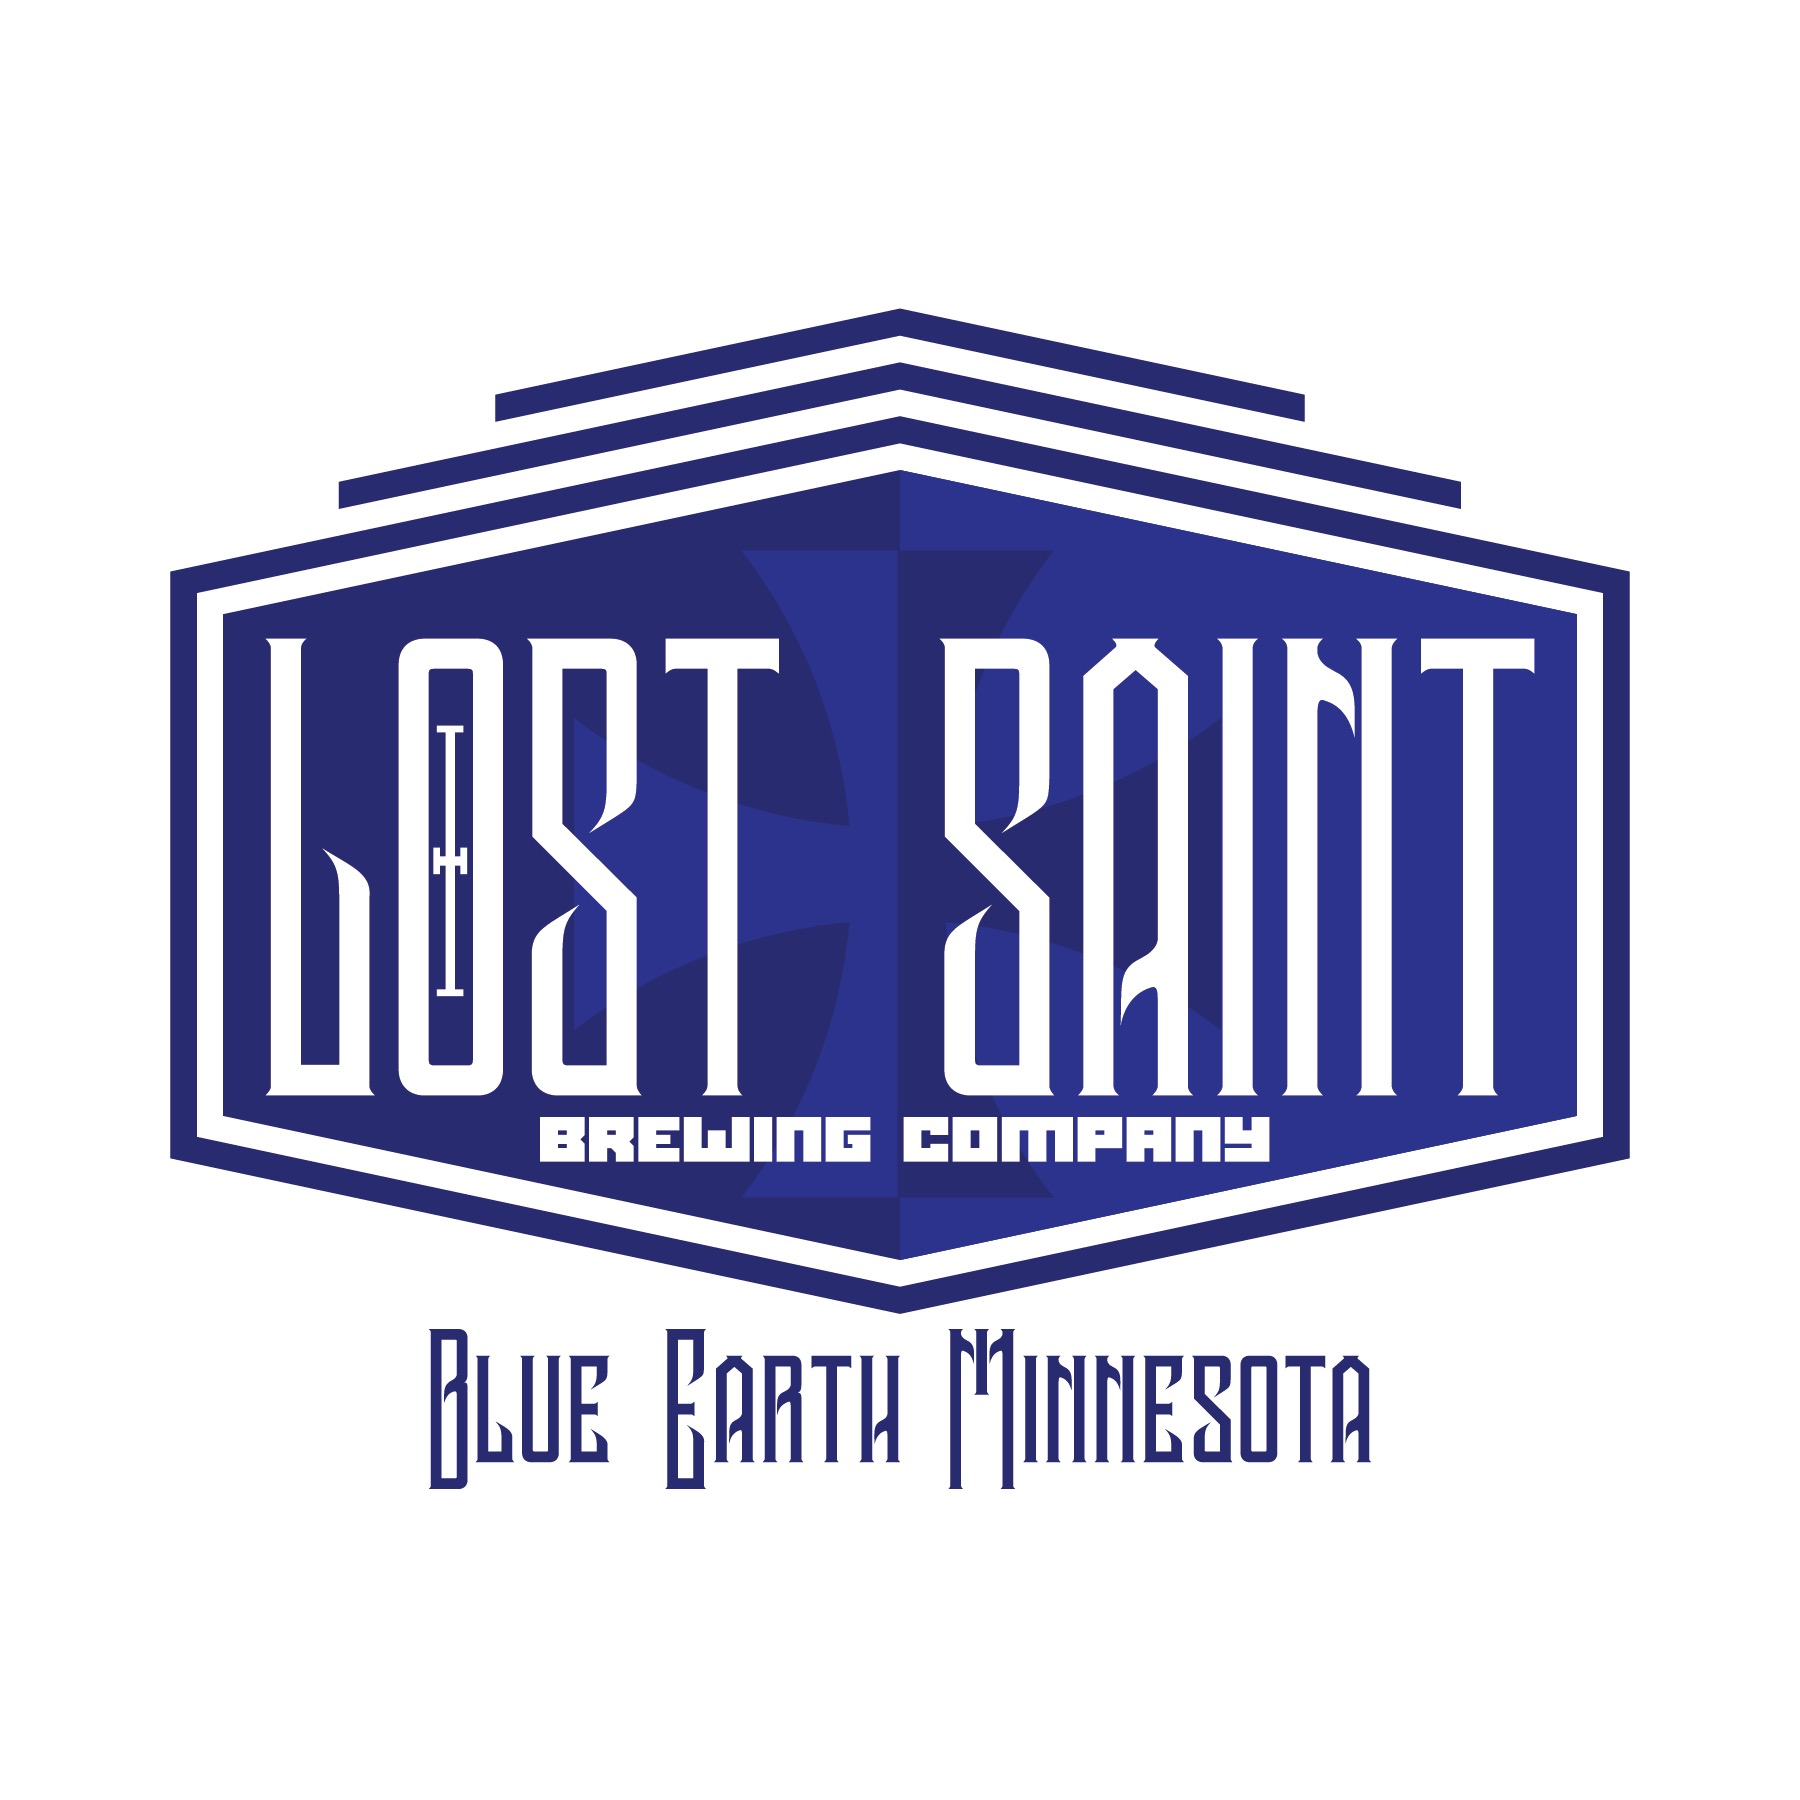 Lost Saint Brewing Company Logo